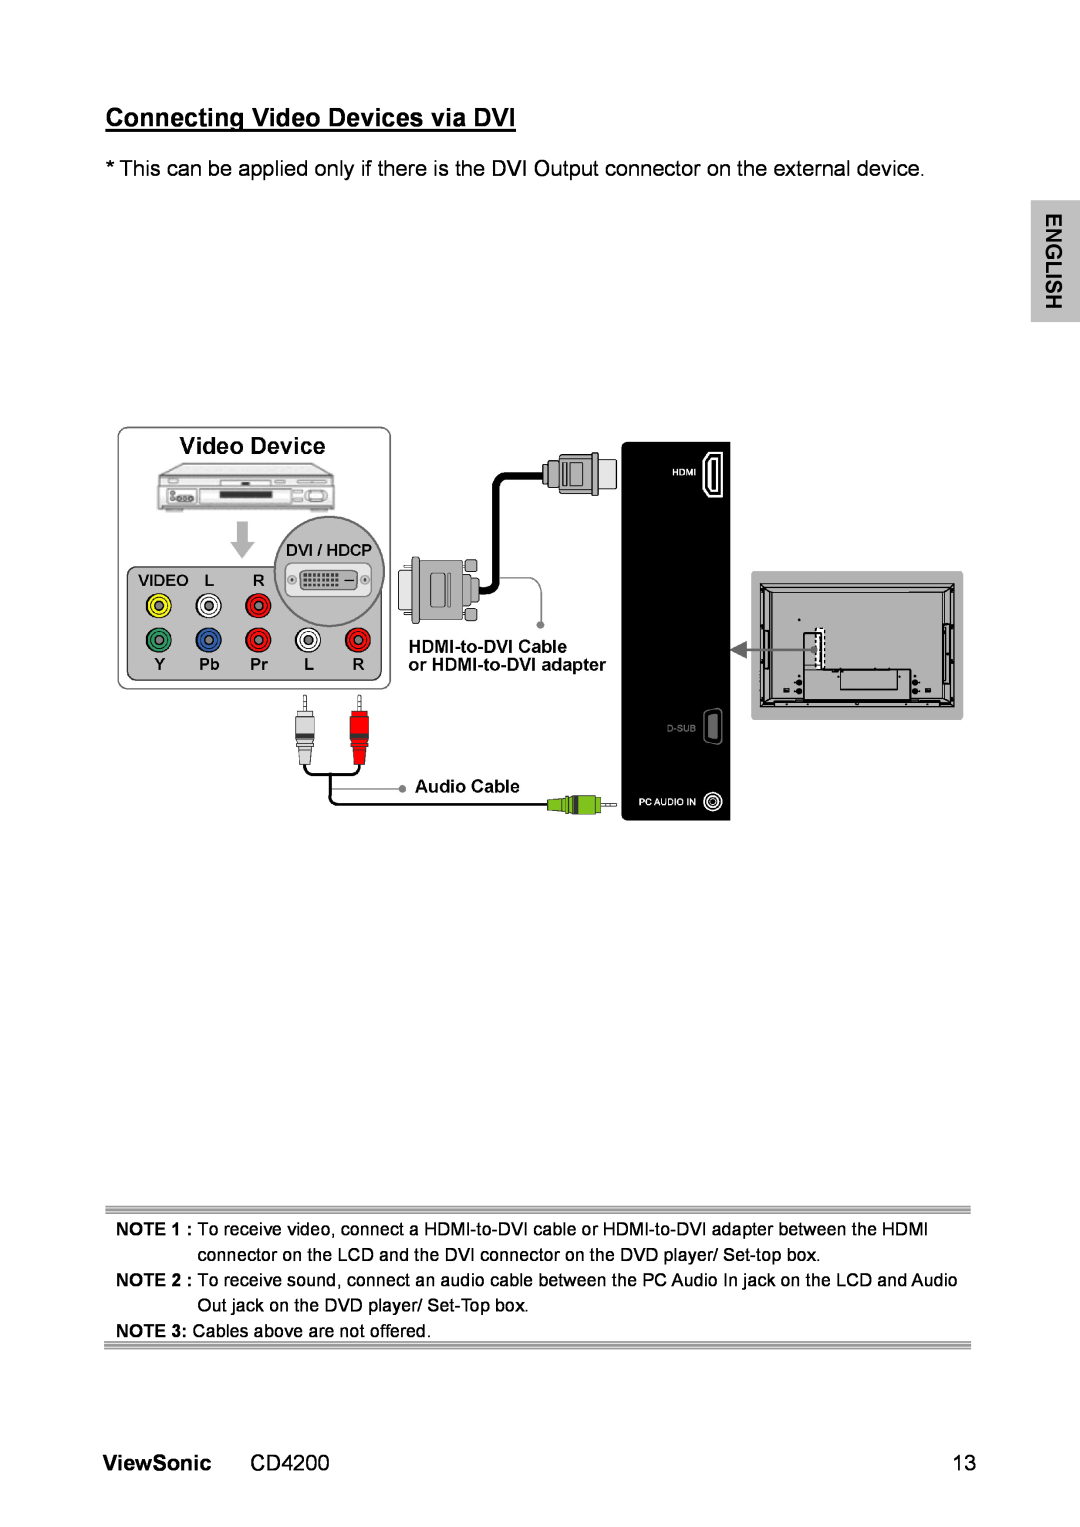 ViewSonic manual Connecting Video Devices via DVI, English, ViewSonic CD4200 